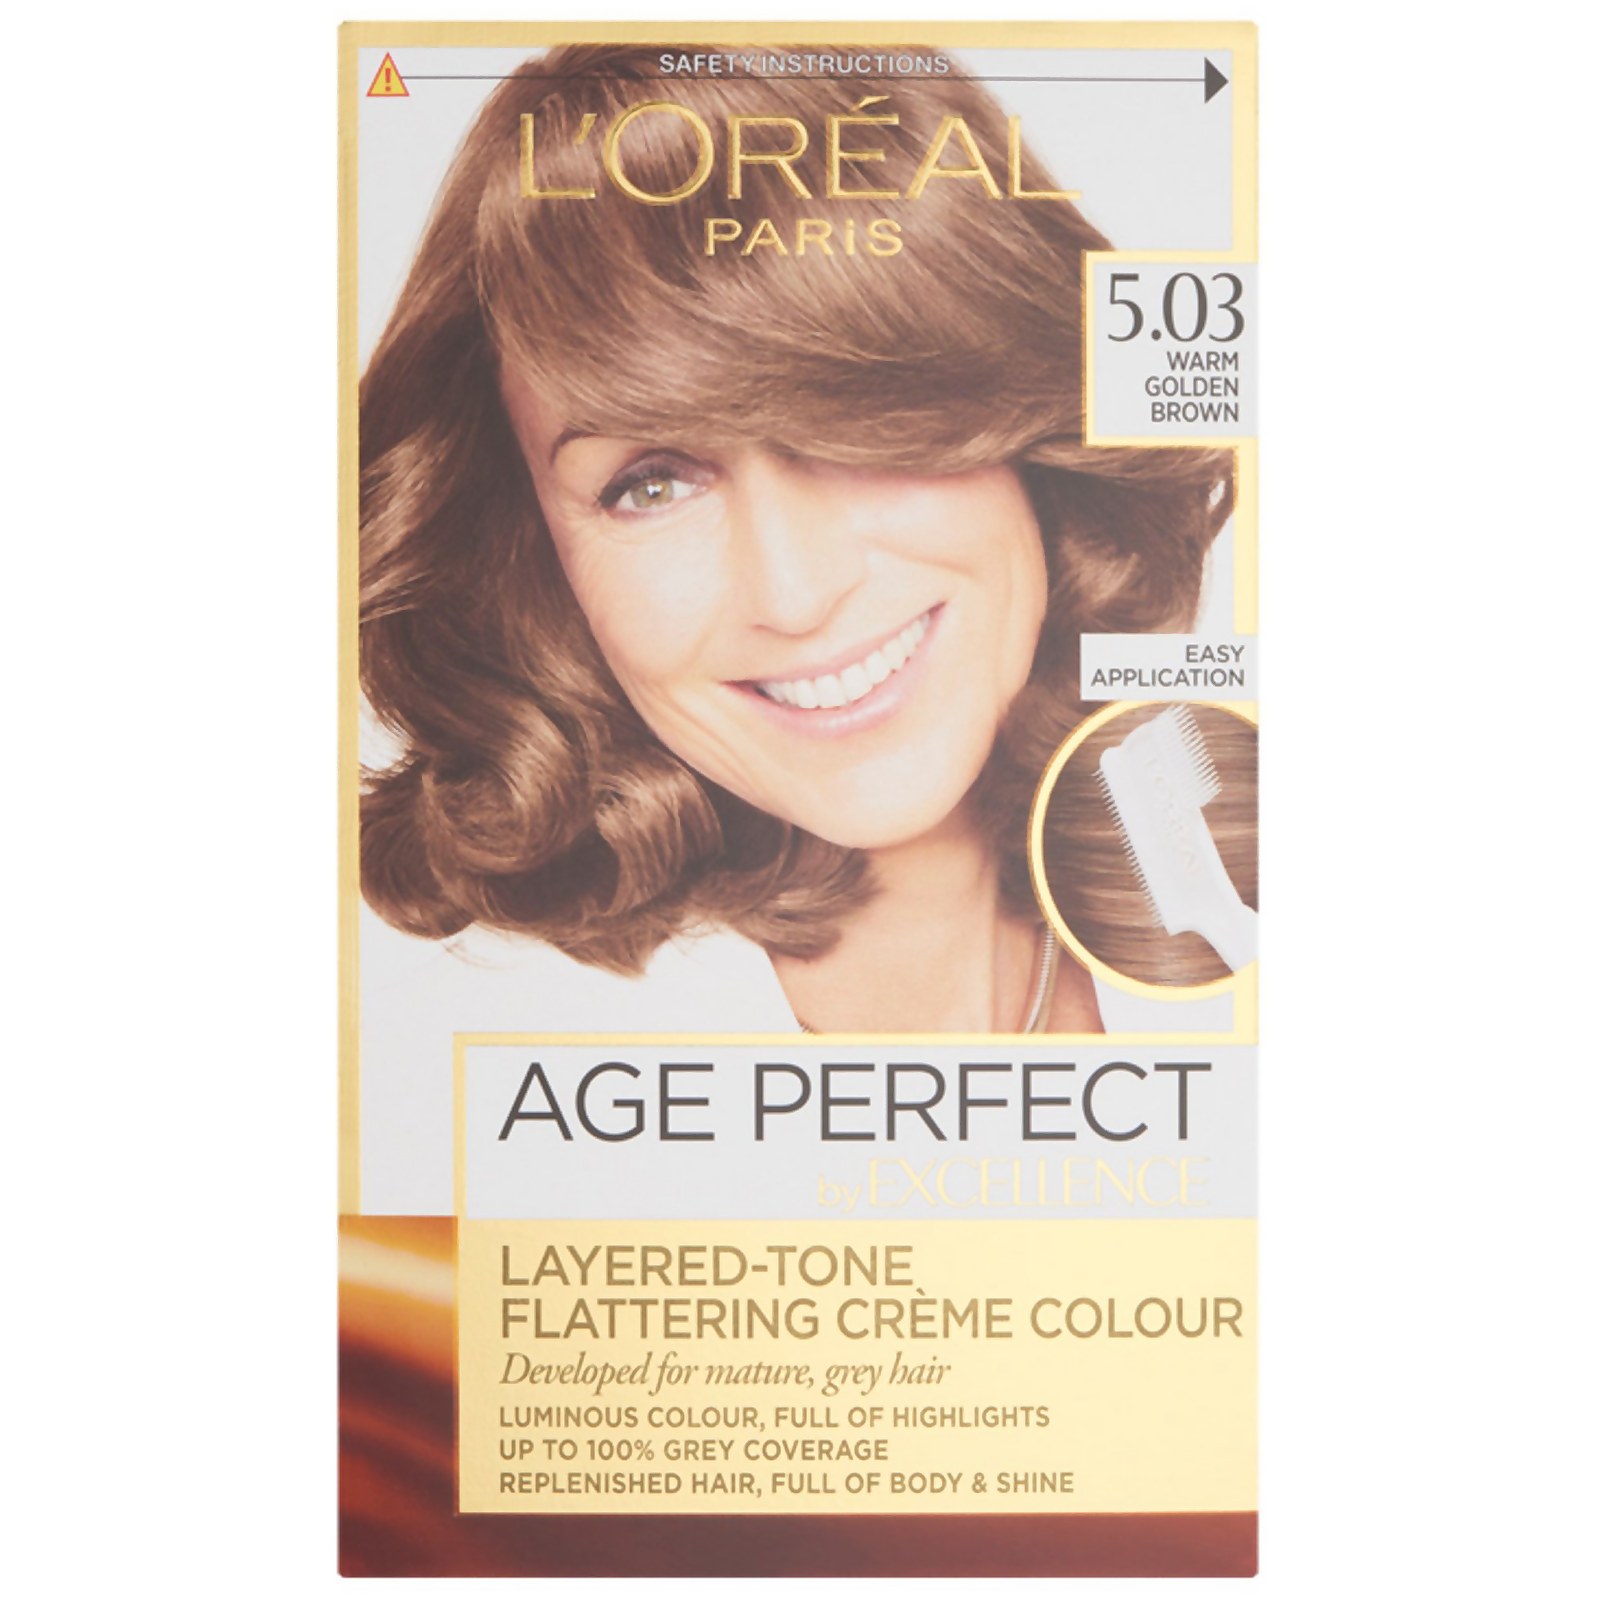 L'Oréal Paris Age Perfect Hair Dye (Various Shades) - 5.03 Warm Golden Brown